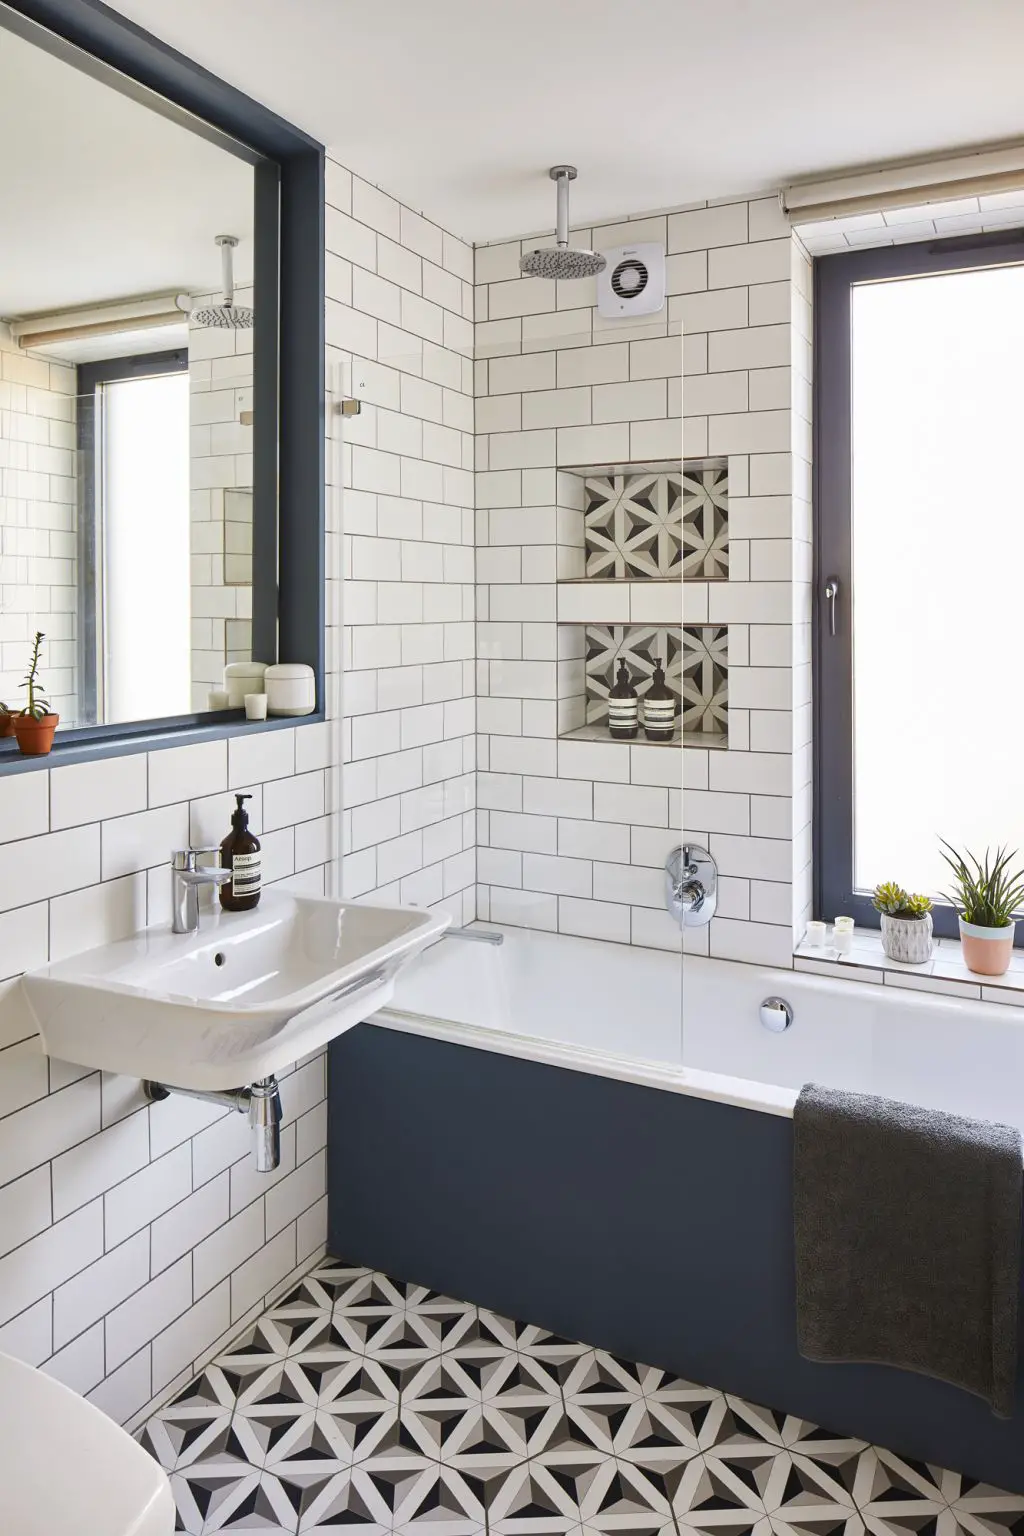 Small Bathroom Makeover Ideas On A Budget - BEST HOME DESIGN IDEAS